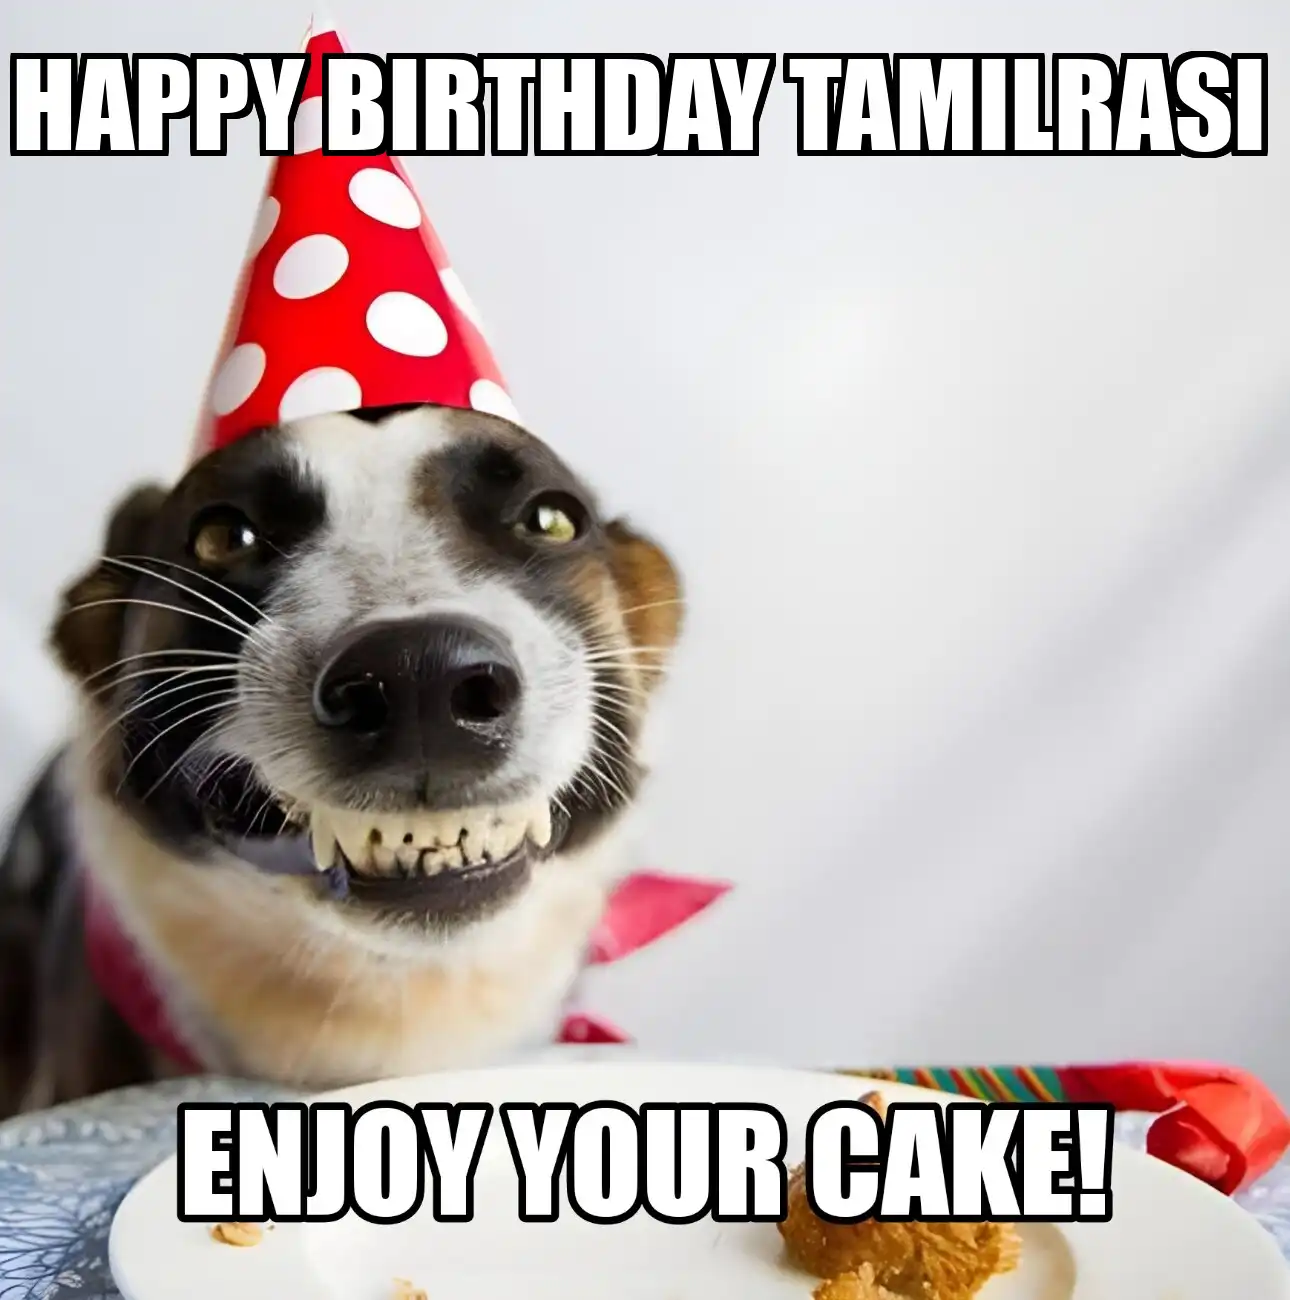 Happy Birthday Tamilrasi Enjoy Your Cake Dog Meme